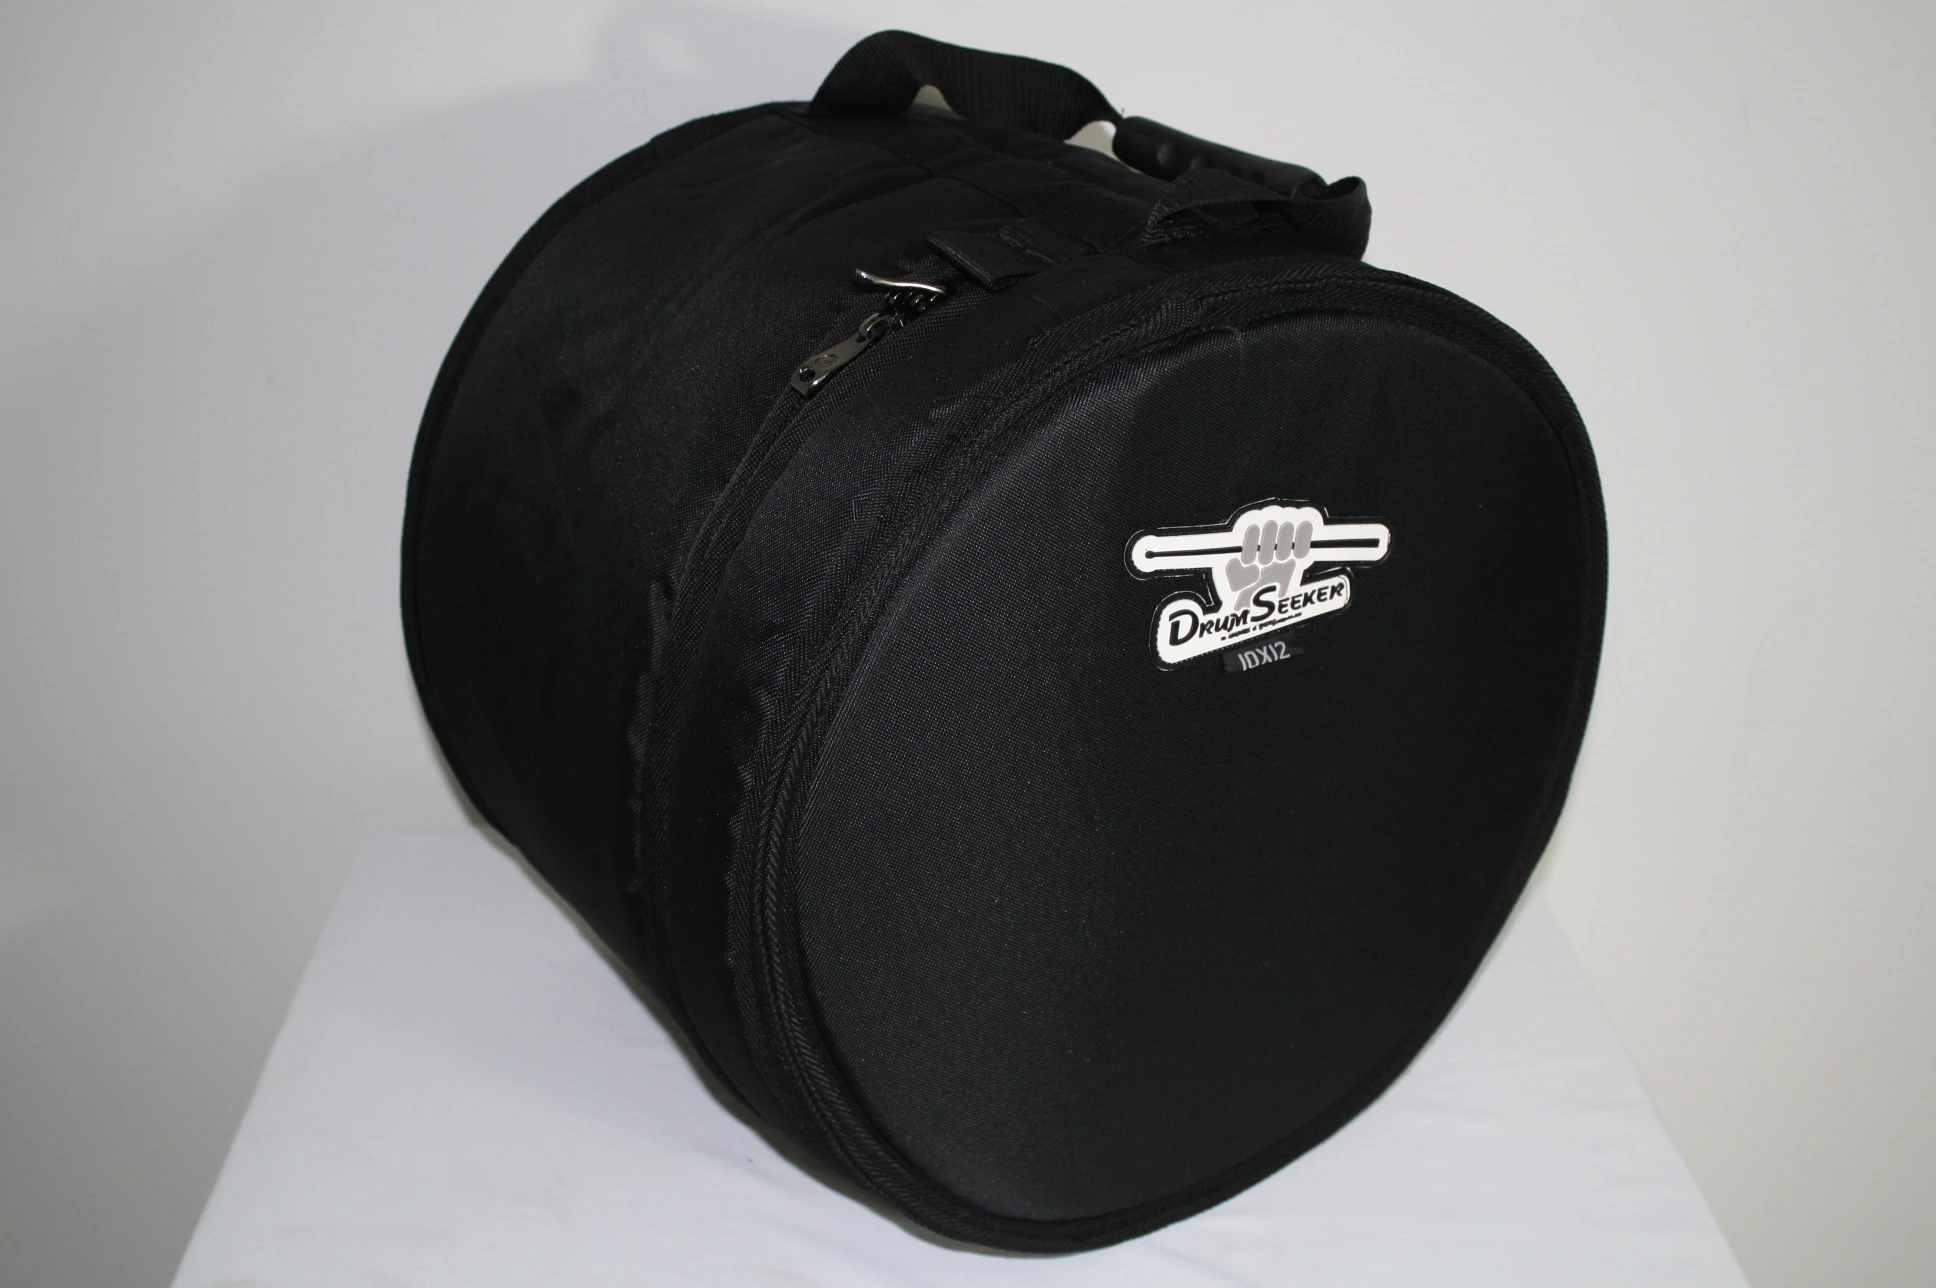 H&B Drum Seeker 8 x 12 Inches Tom Drum Bag